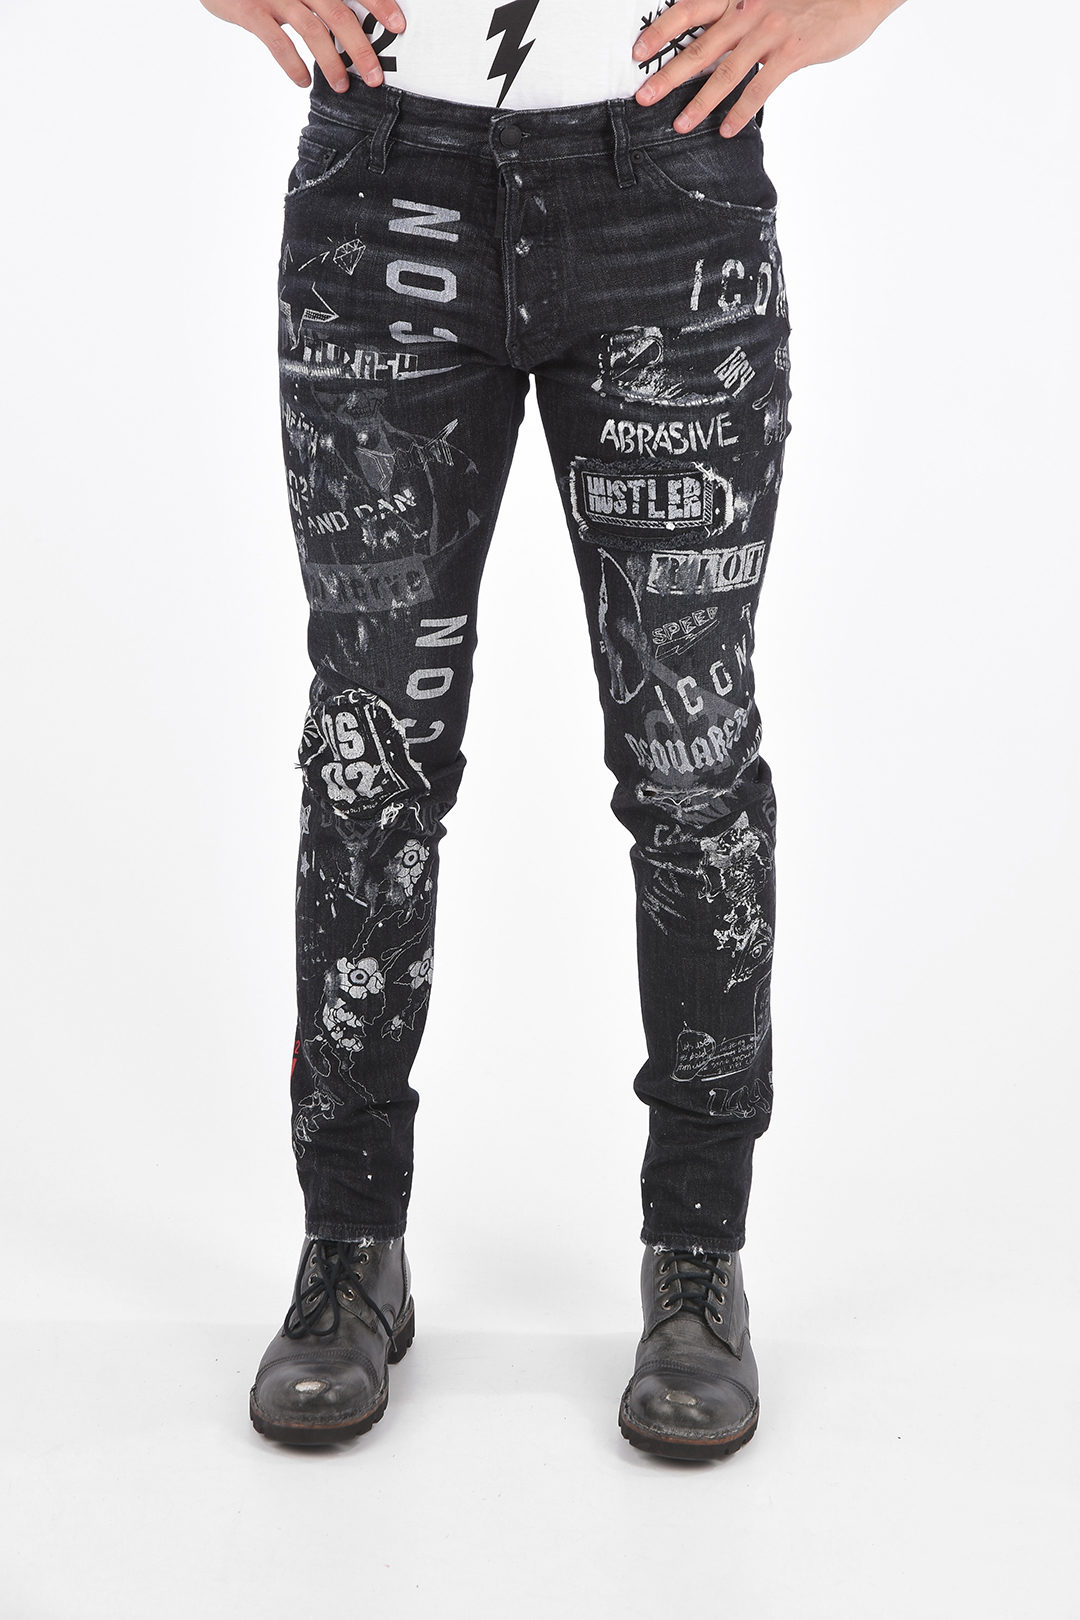 ICON Graffiti Printed COOL GUY Jeans 17cm